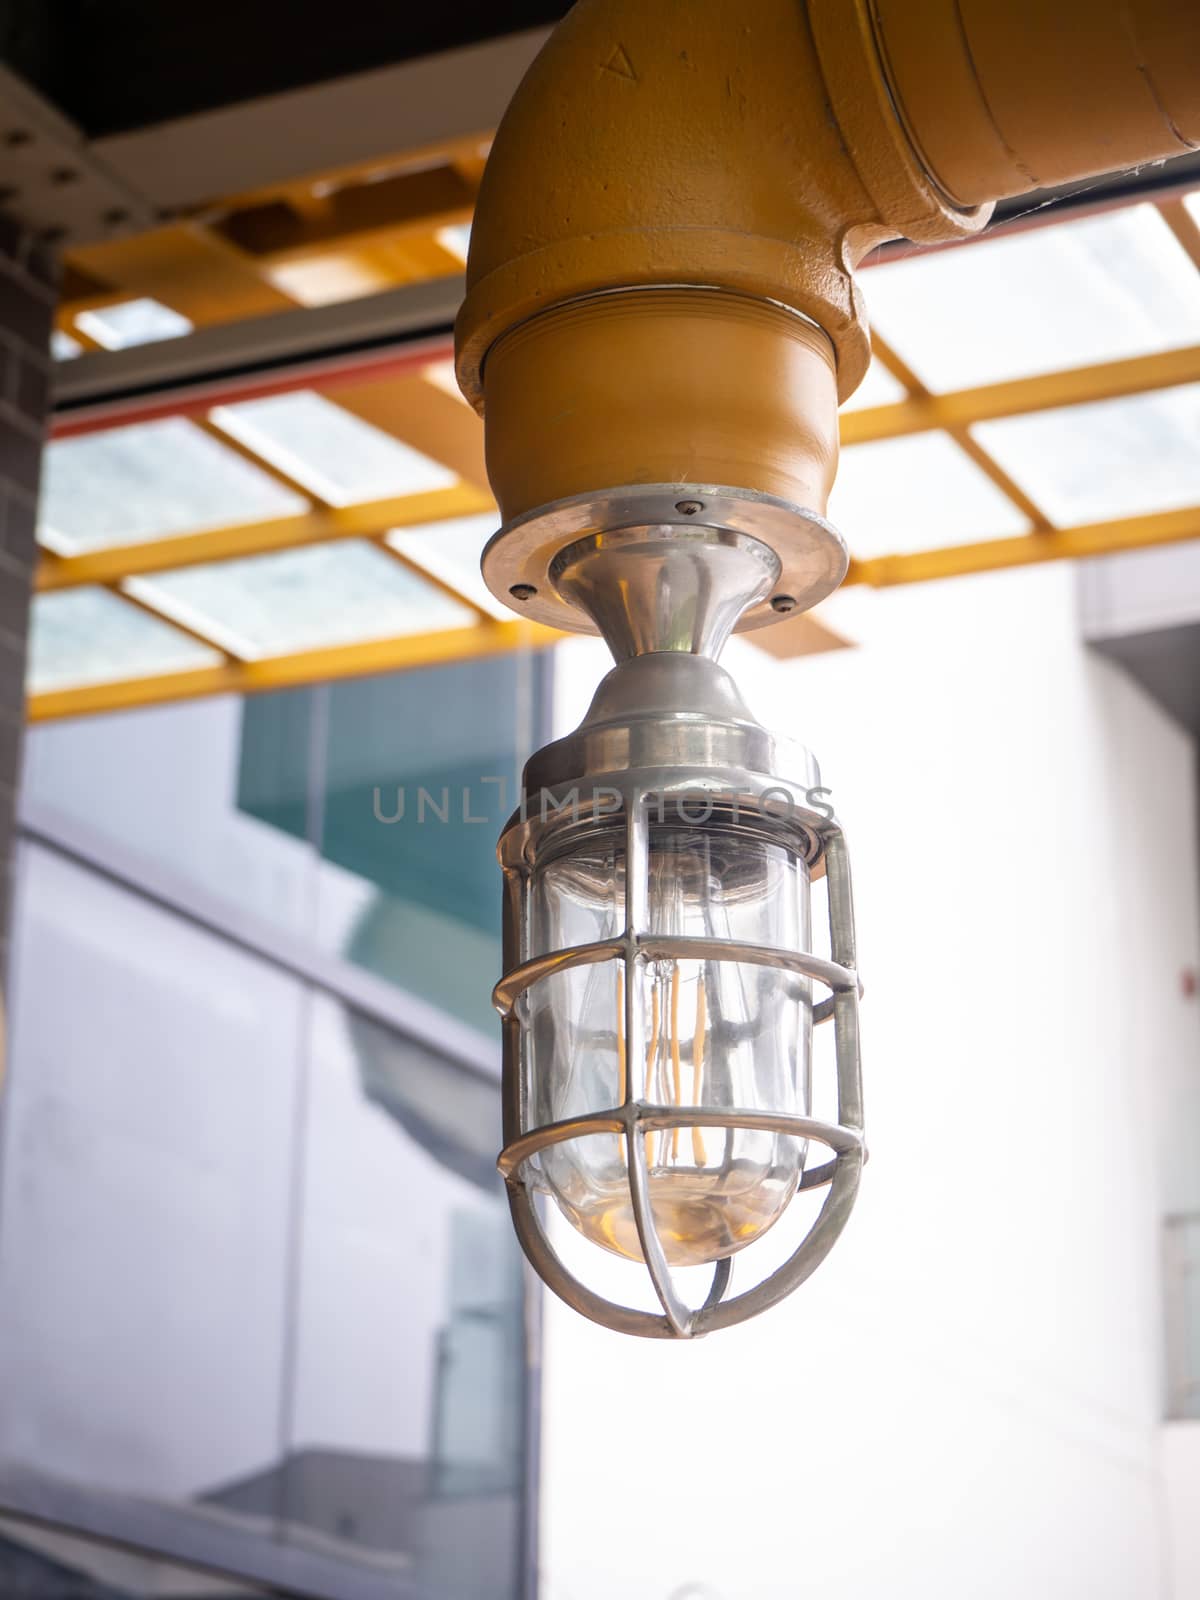 Loft style light bulbs glowing Warm light. by shutterbird